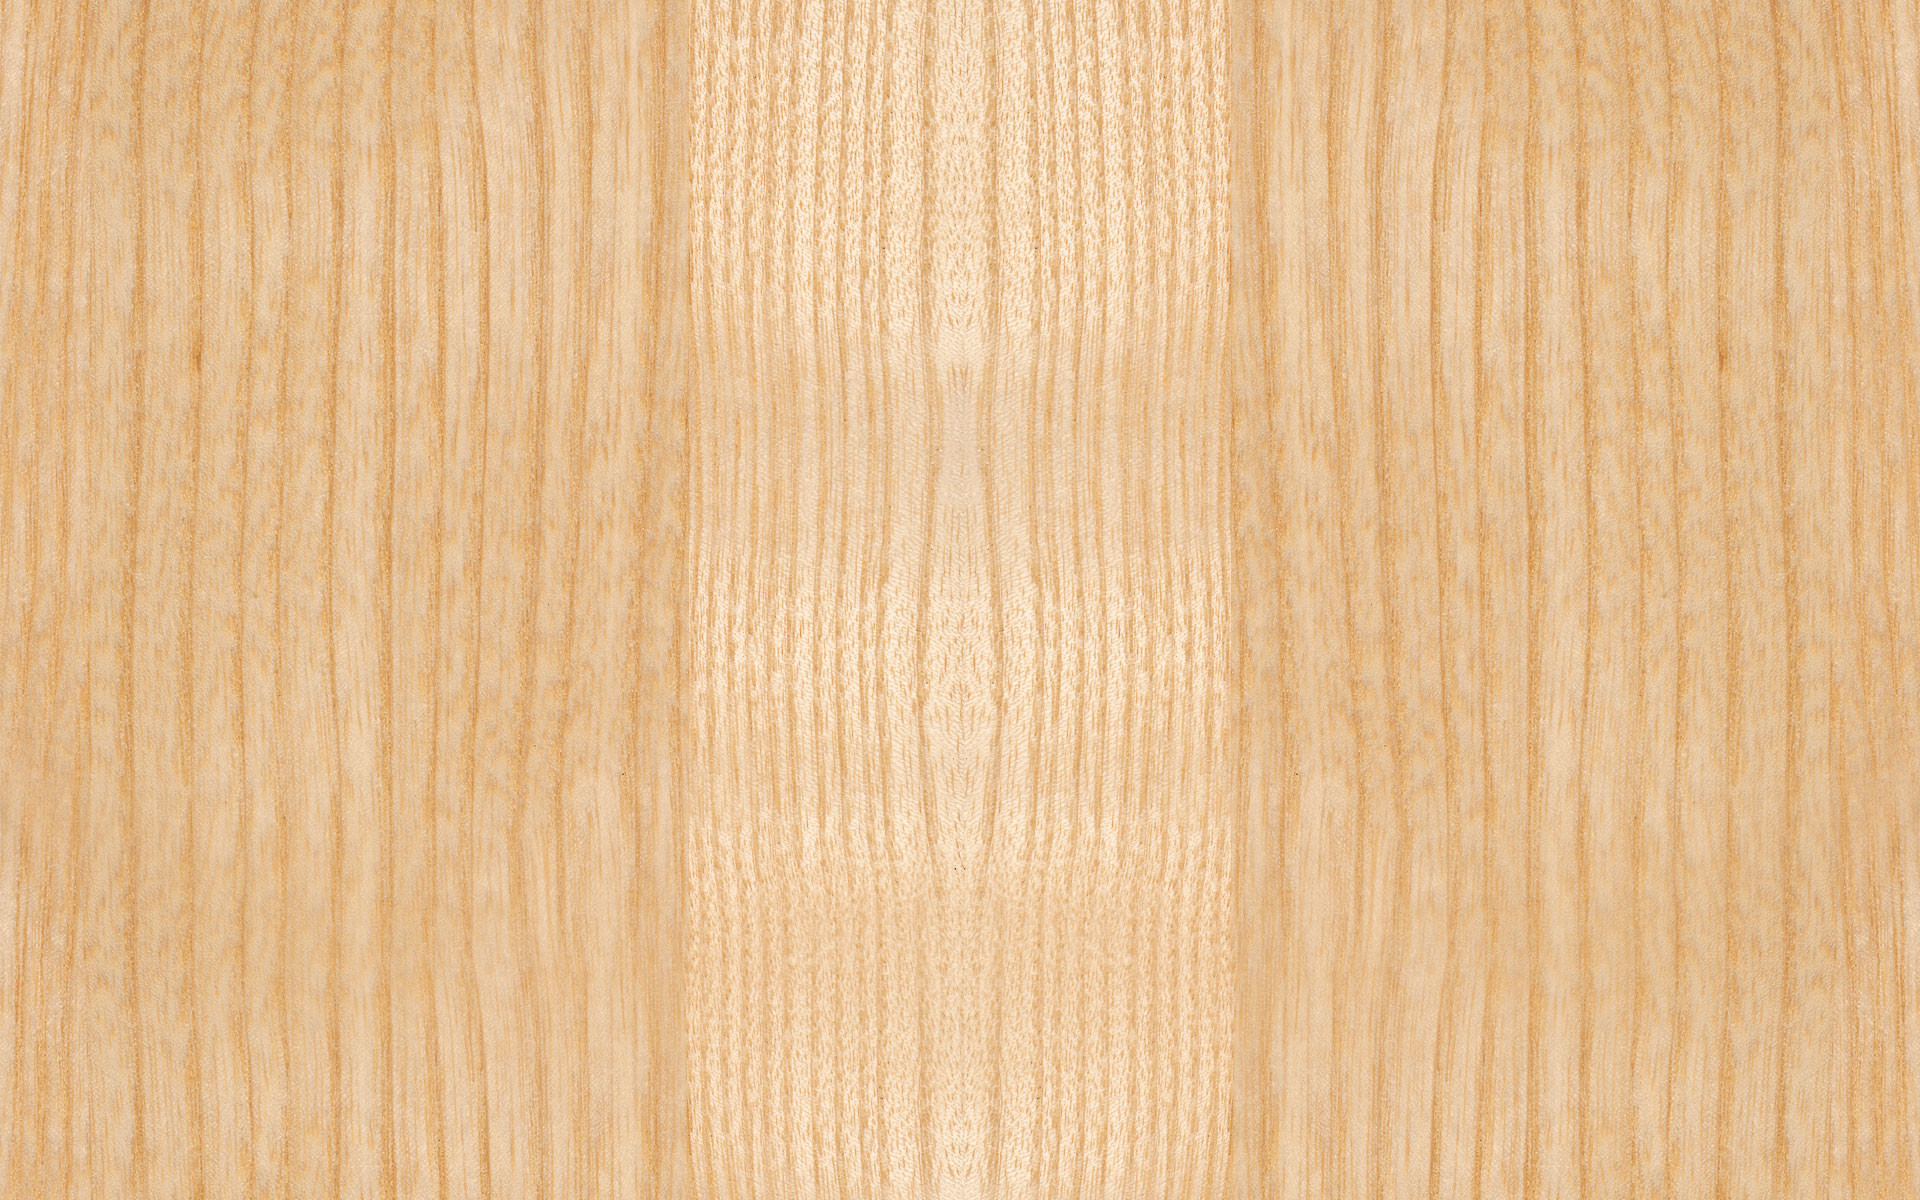 1920x1200 ... Light Wood Grain Background